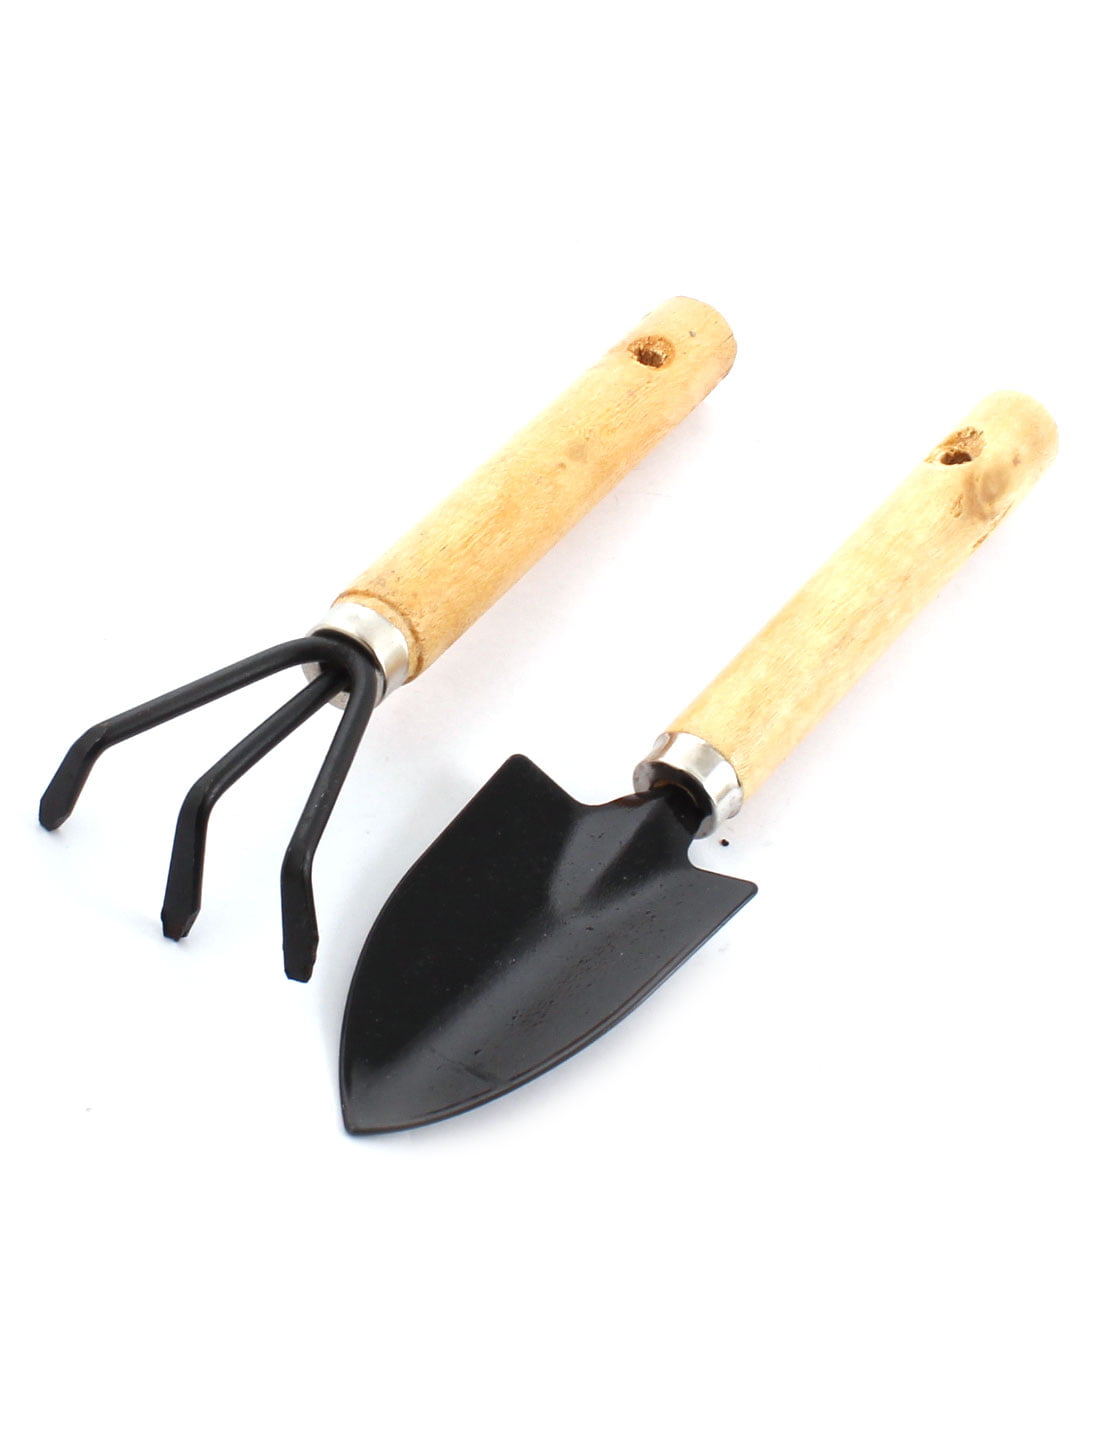 Gardening Small Hand Tools Metal Cultivator Digging Trowel Shovel ...